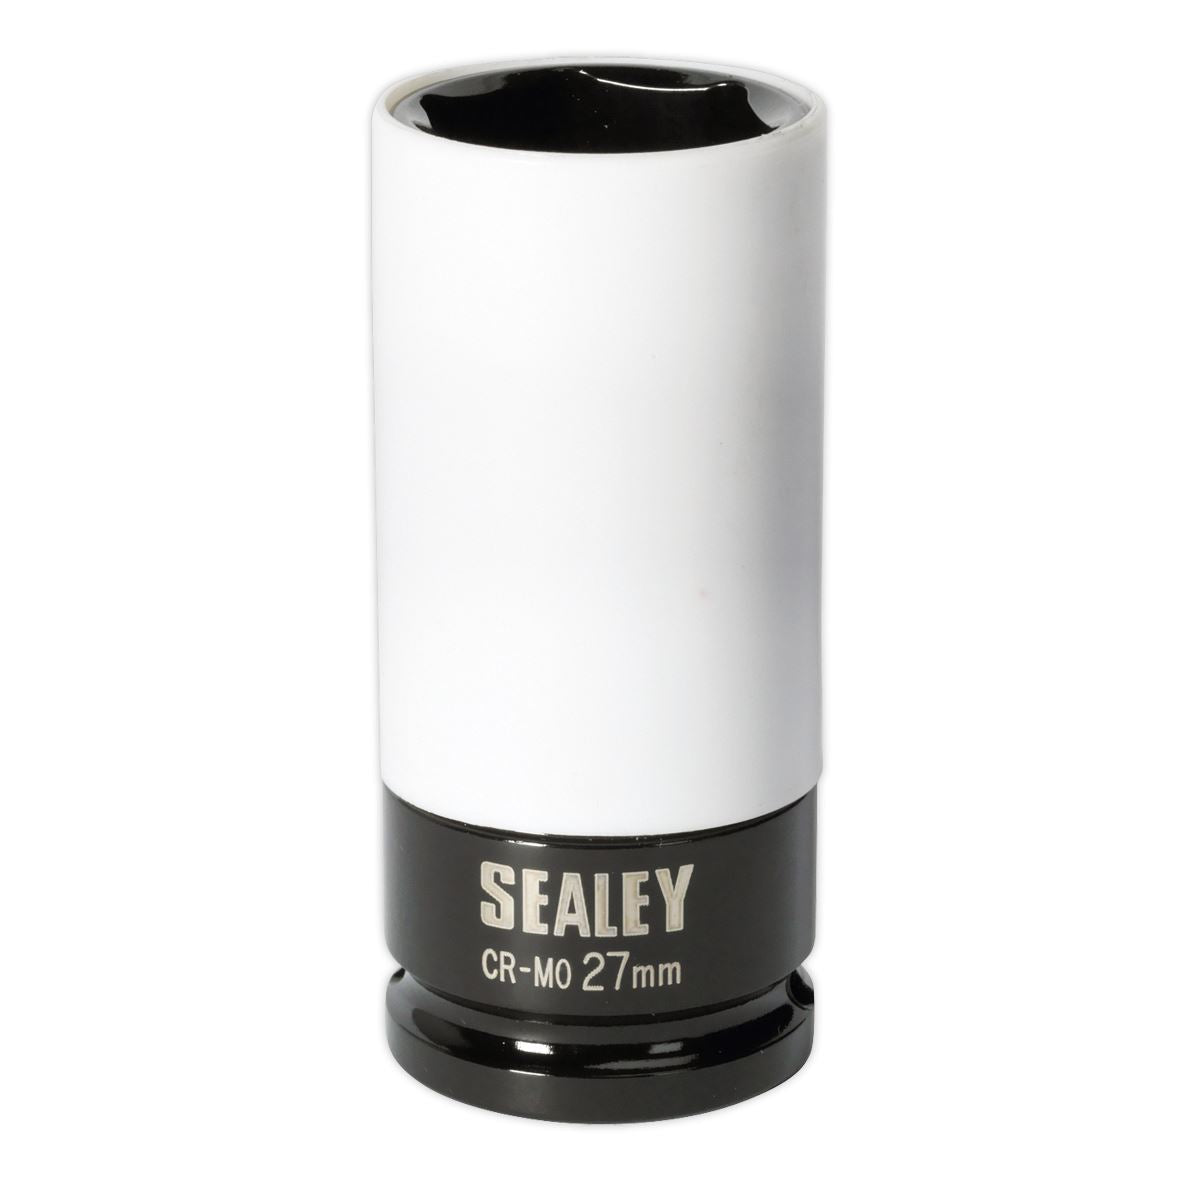 Sealey Alloy Wheel Impact Socket 27mm 1/2"Sq Drive